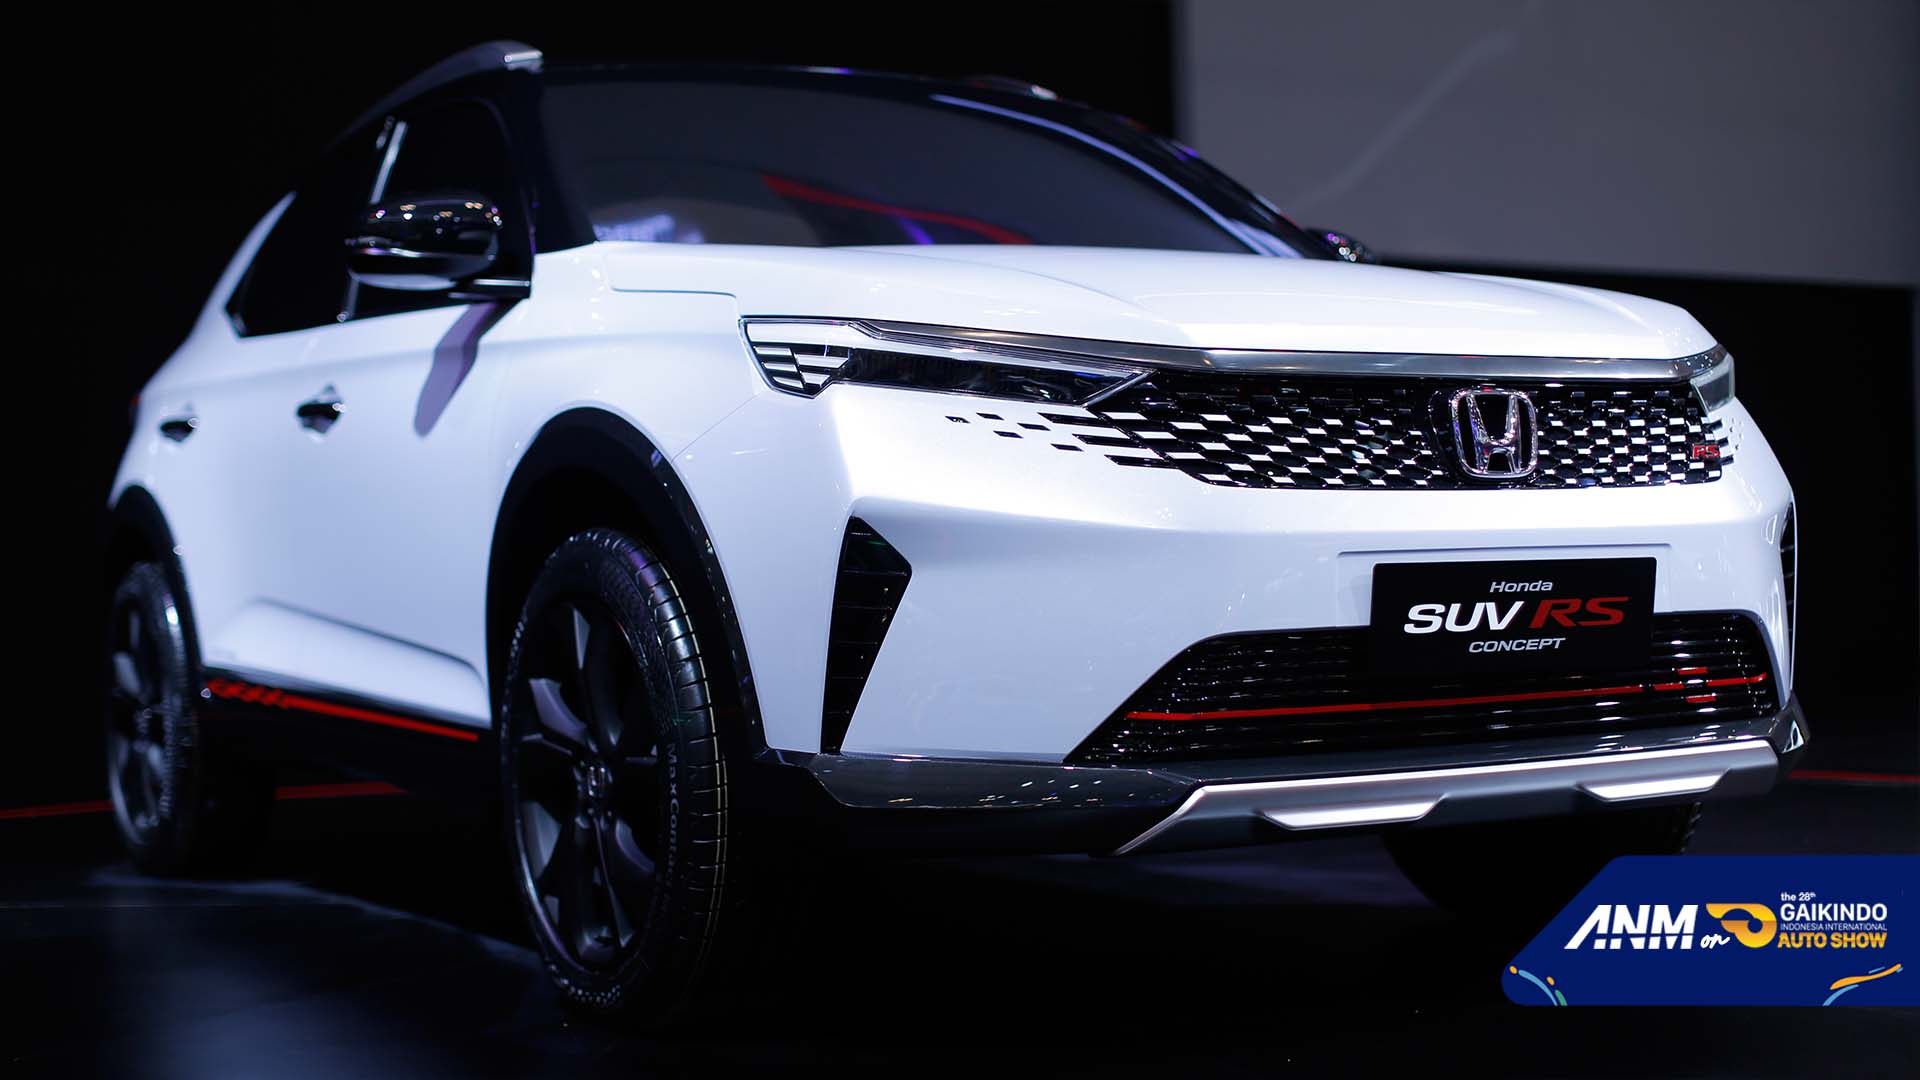 Berita, Foto Honda SUV RS Concept: GIIAS 2021 : Foto Lengkap Honda SUV RS Concept, Emang Ganteng!